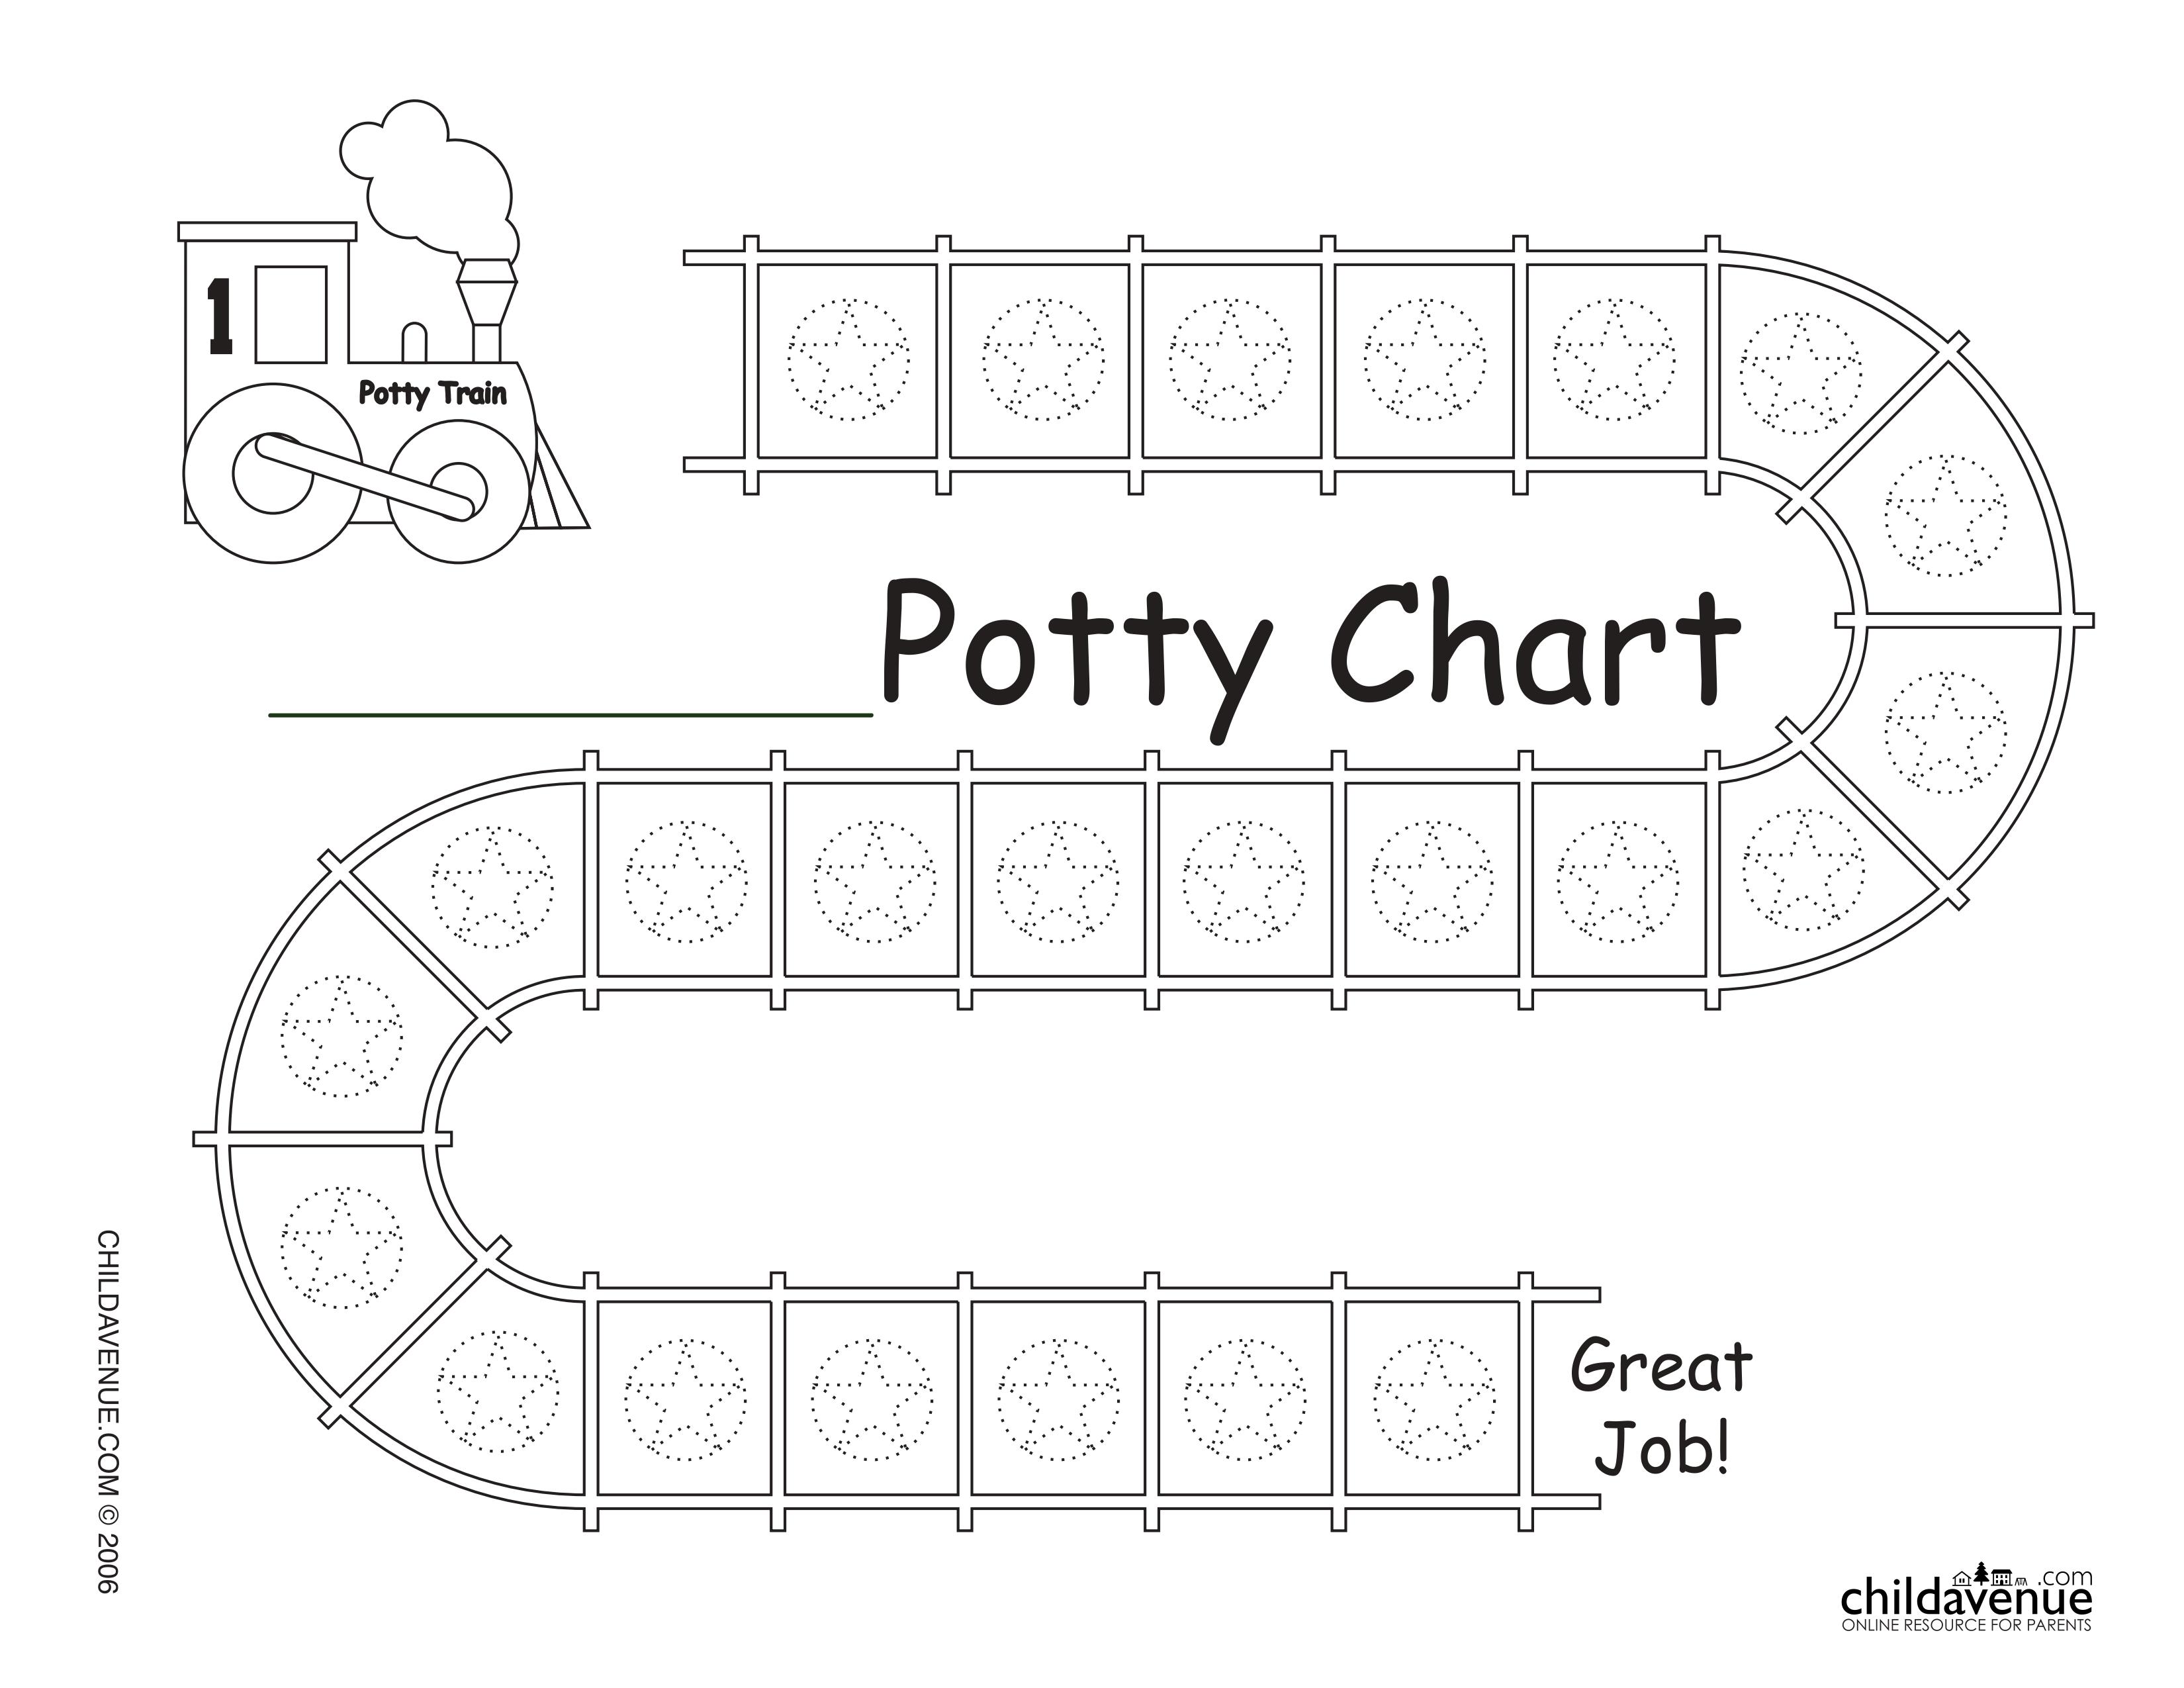 Thomas Toilet Training Chart